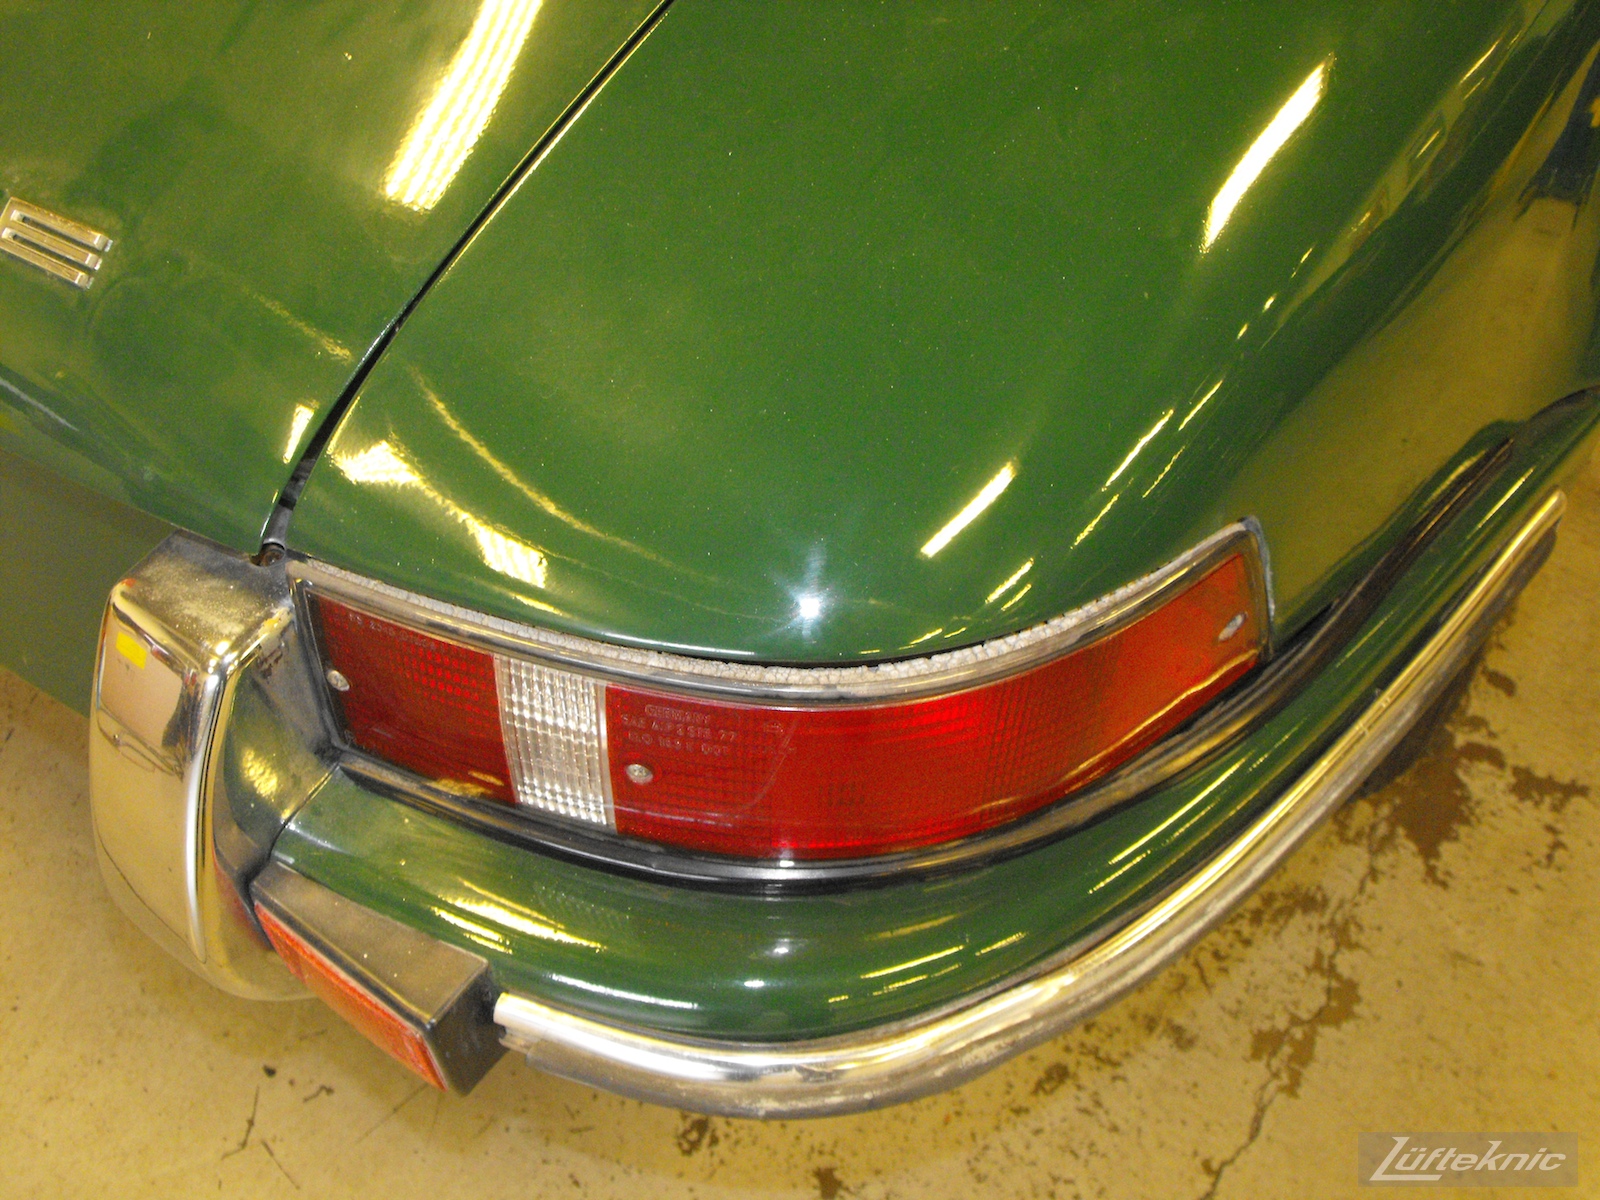 Aged tail lights of an Irish Green Porsche 912 undergoing restoration at Lufteknic.